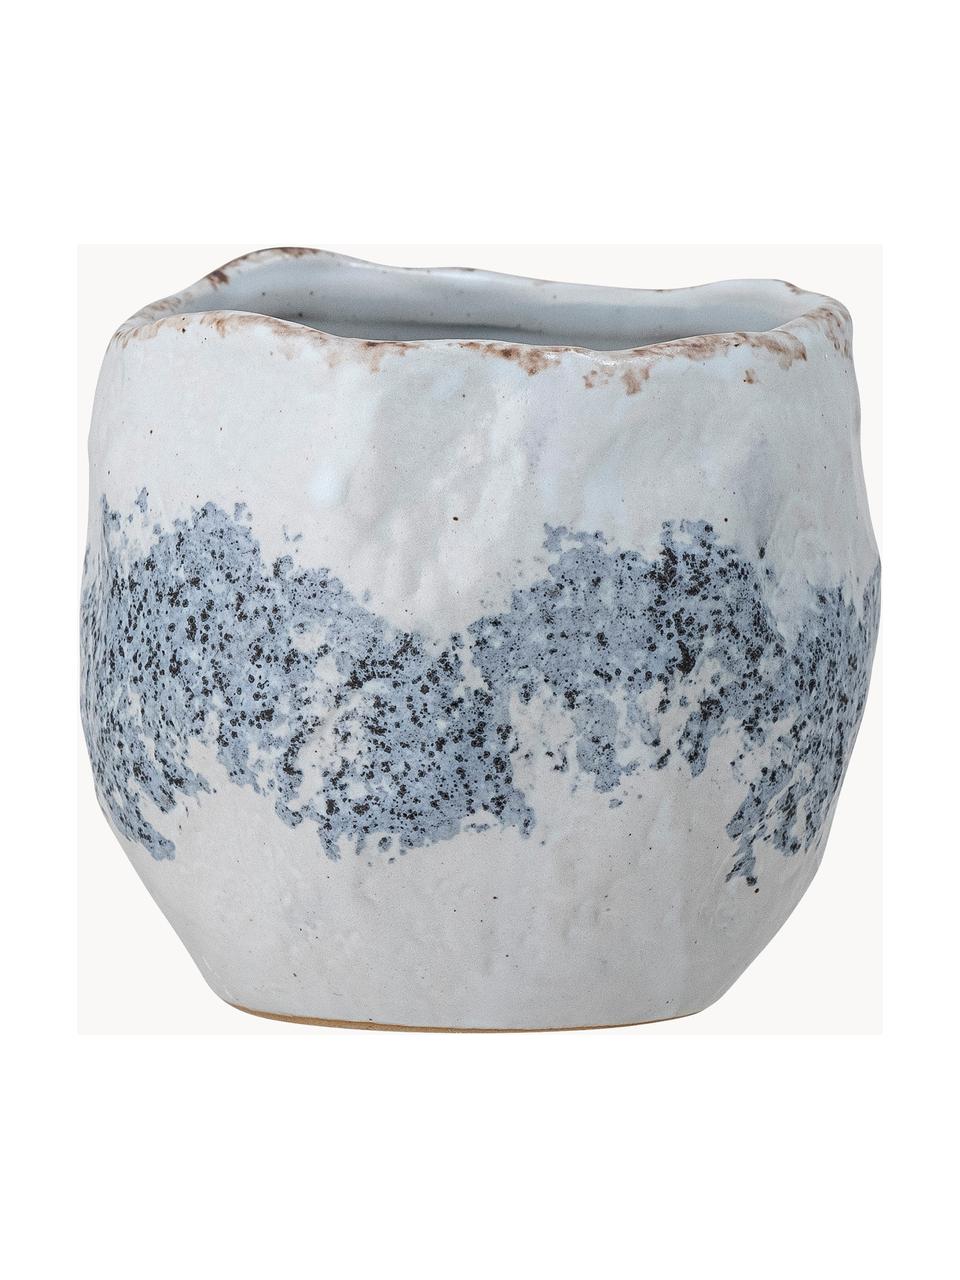 Mug artisanal avec émail réactif Alise, Grès cérame, Tons bleus, Ø 8 x haut. 8 cm, 200 ml